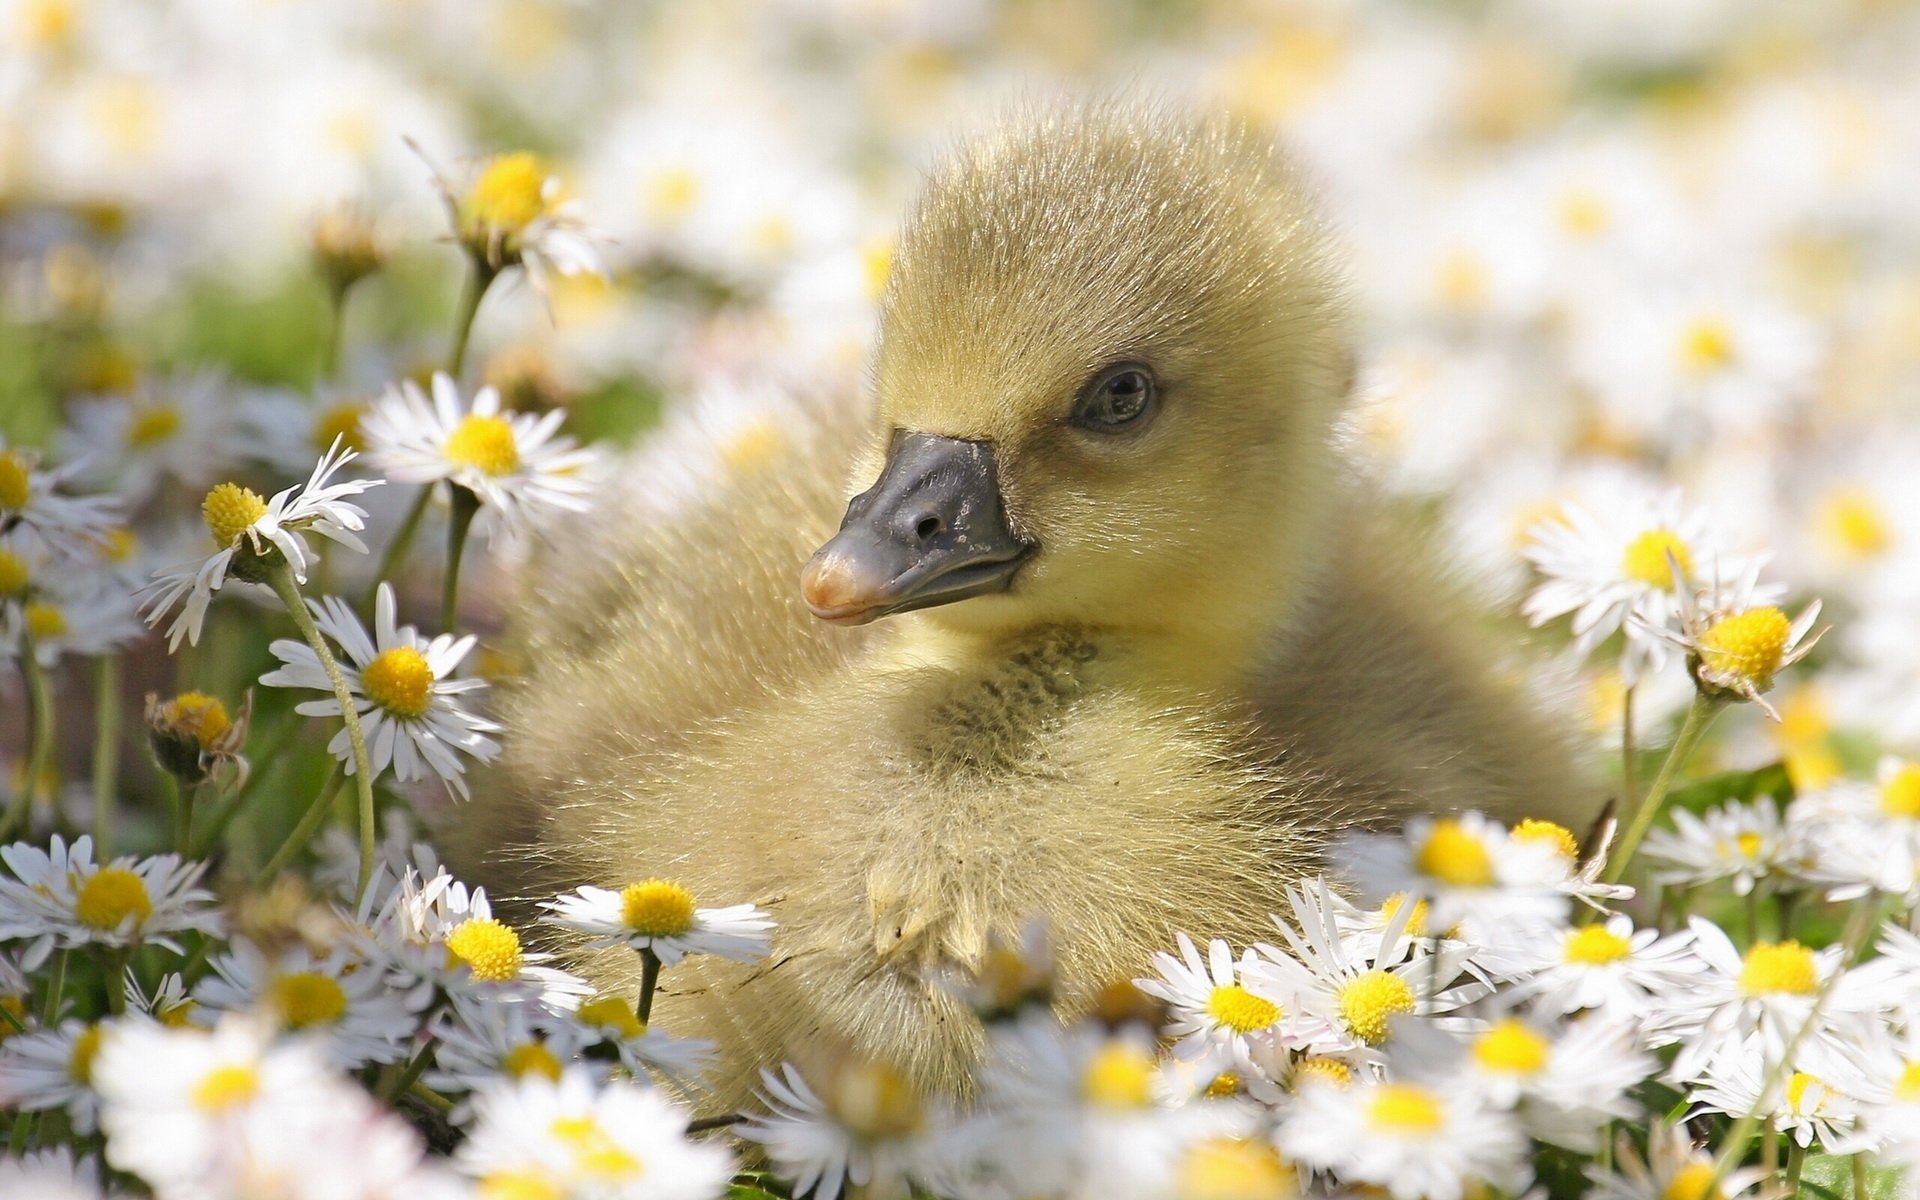 Baby Ducks In Flowers